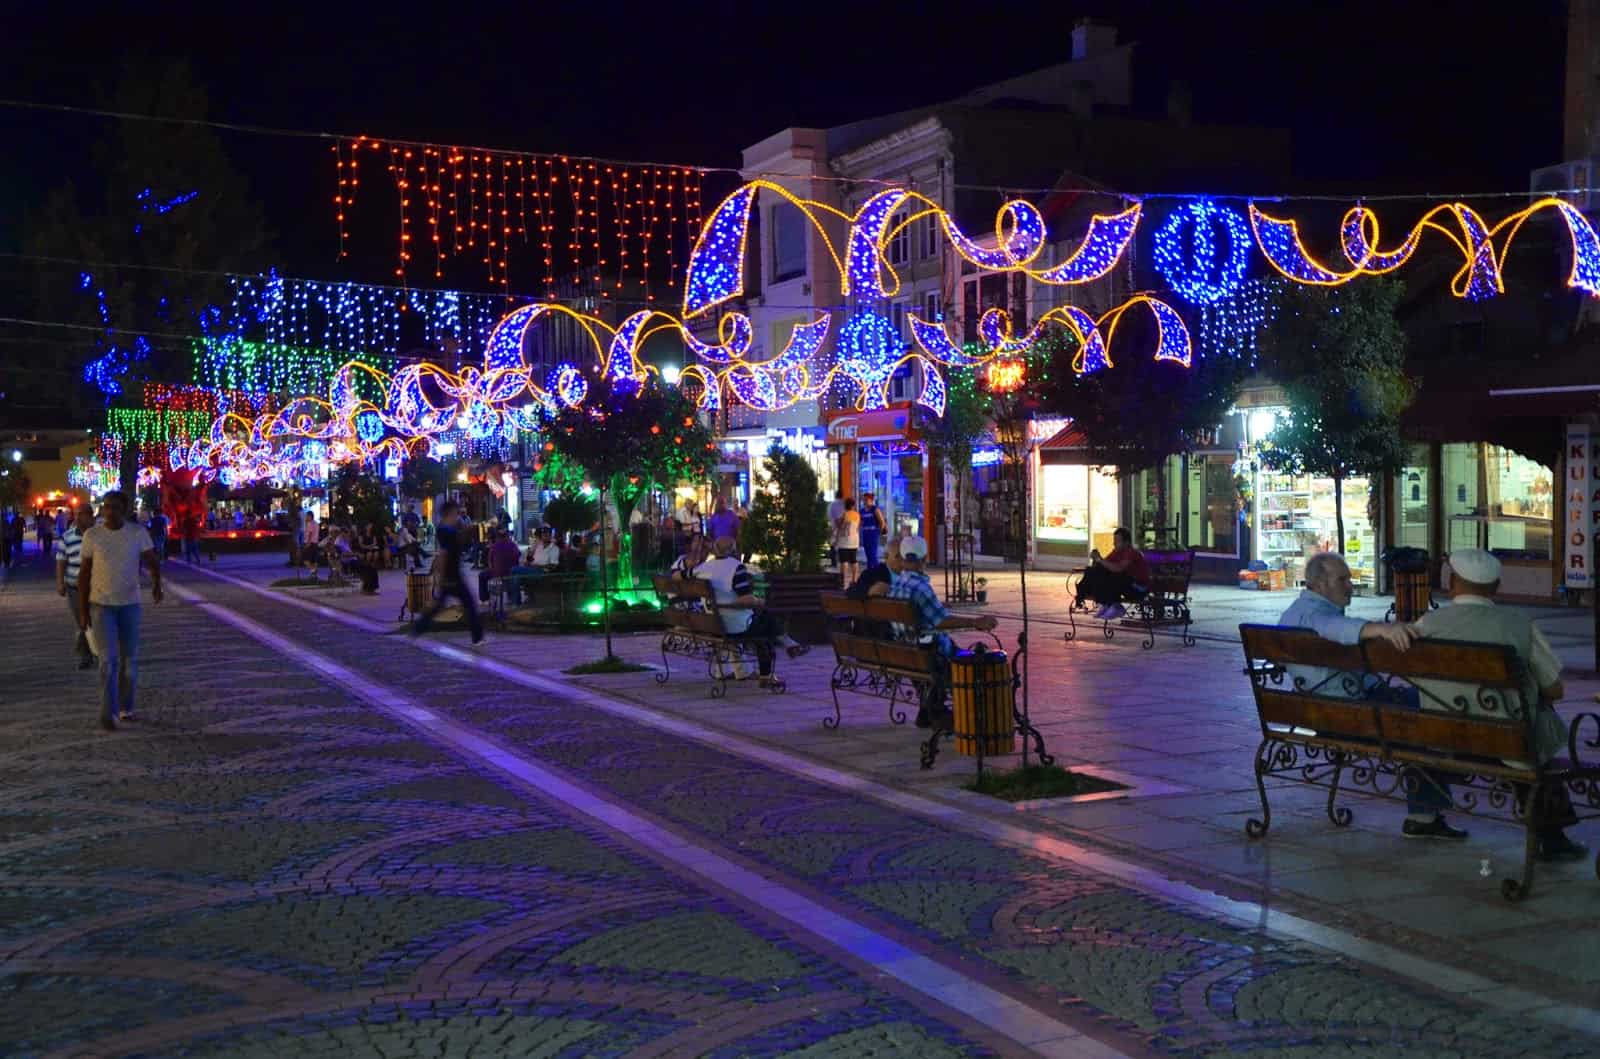 Saraçlar Street lit up at night in Edirne, Turkey